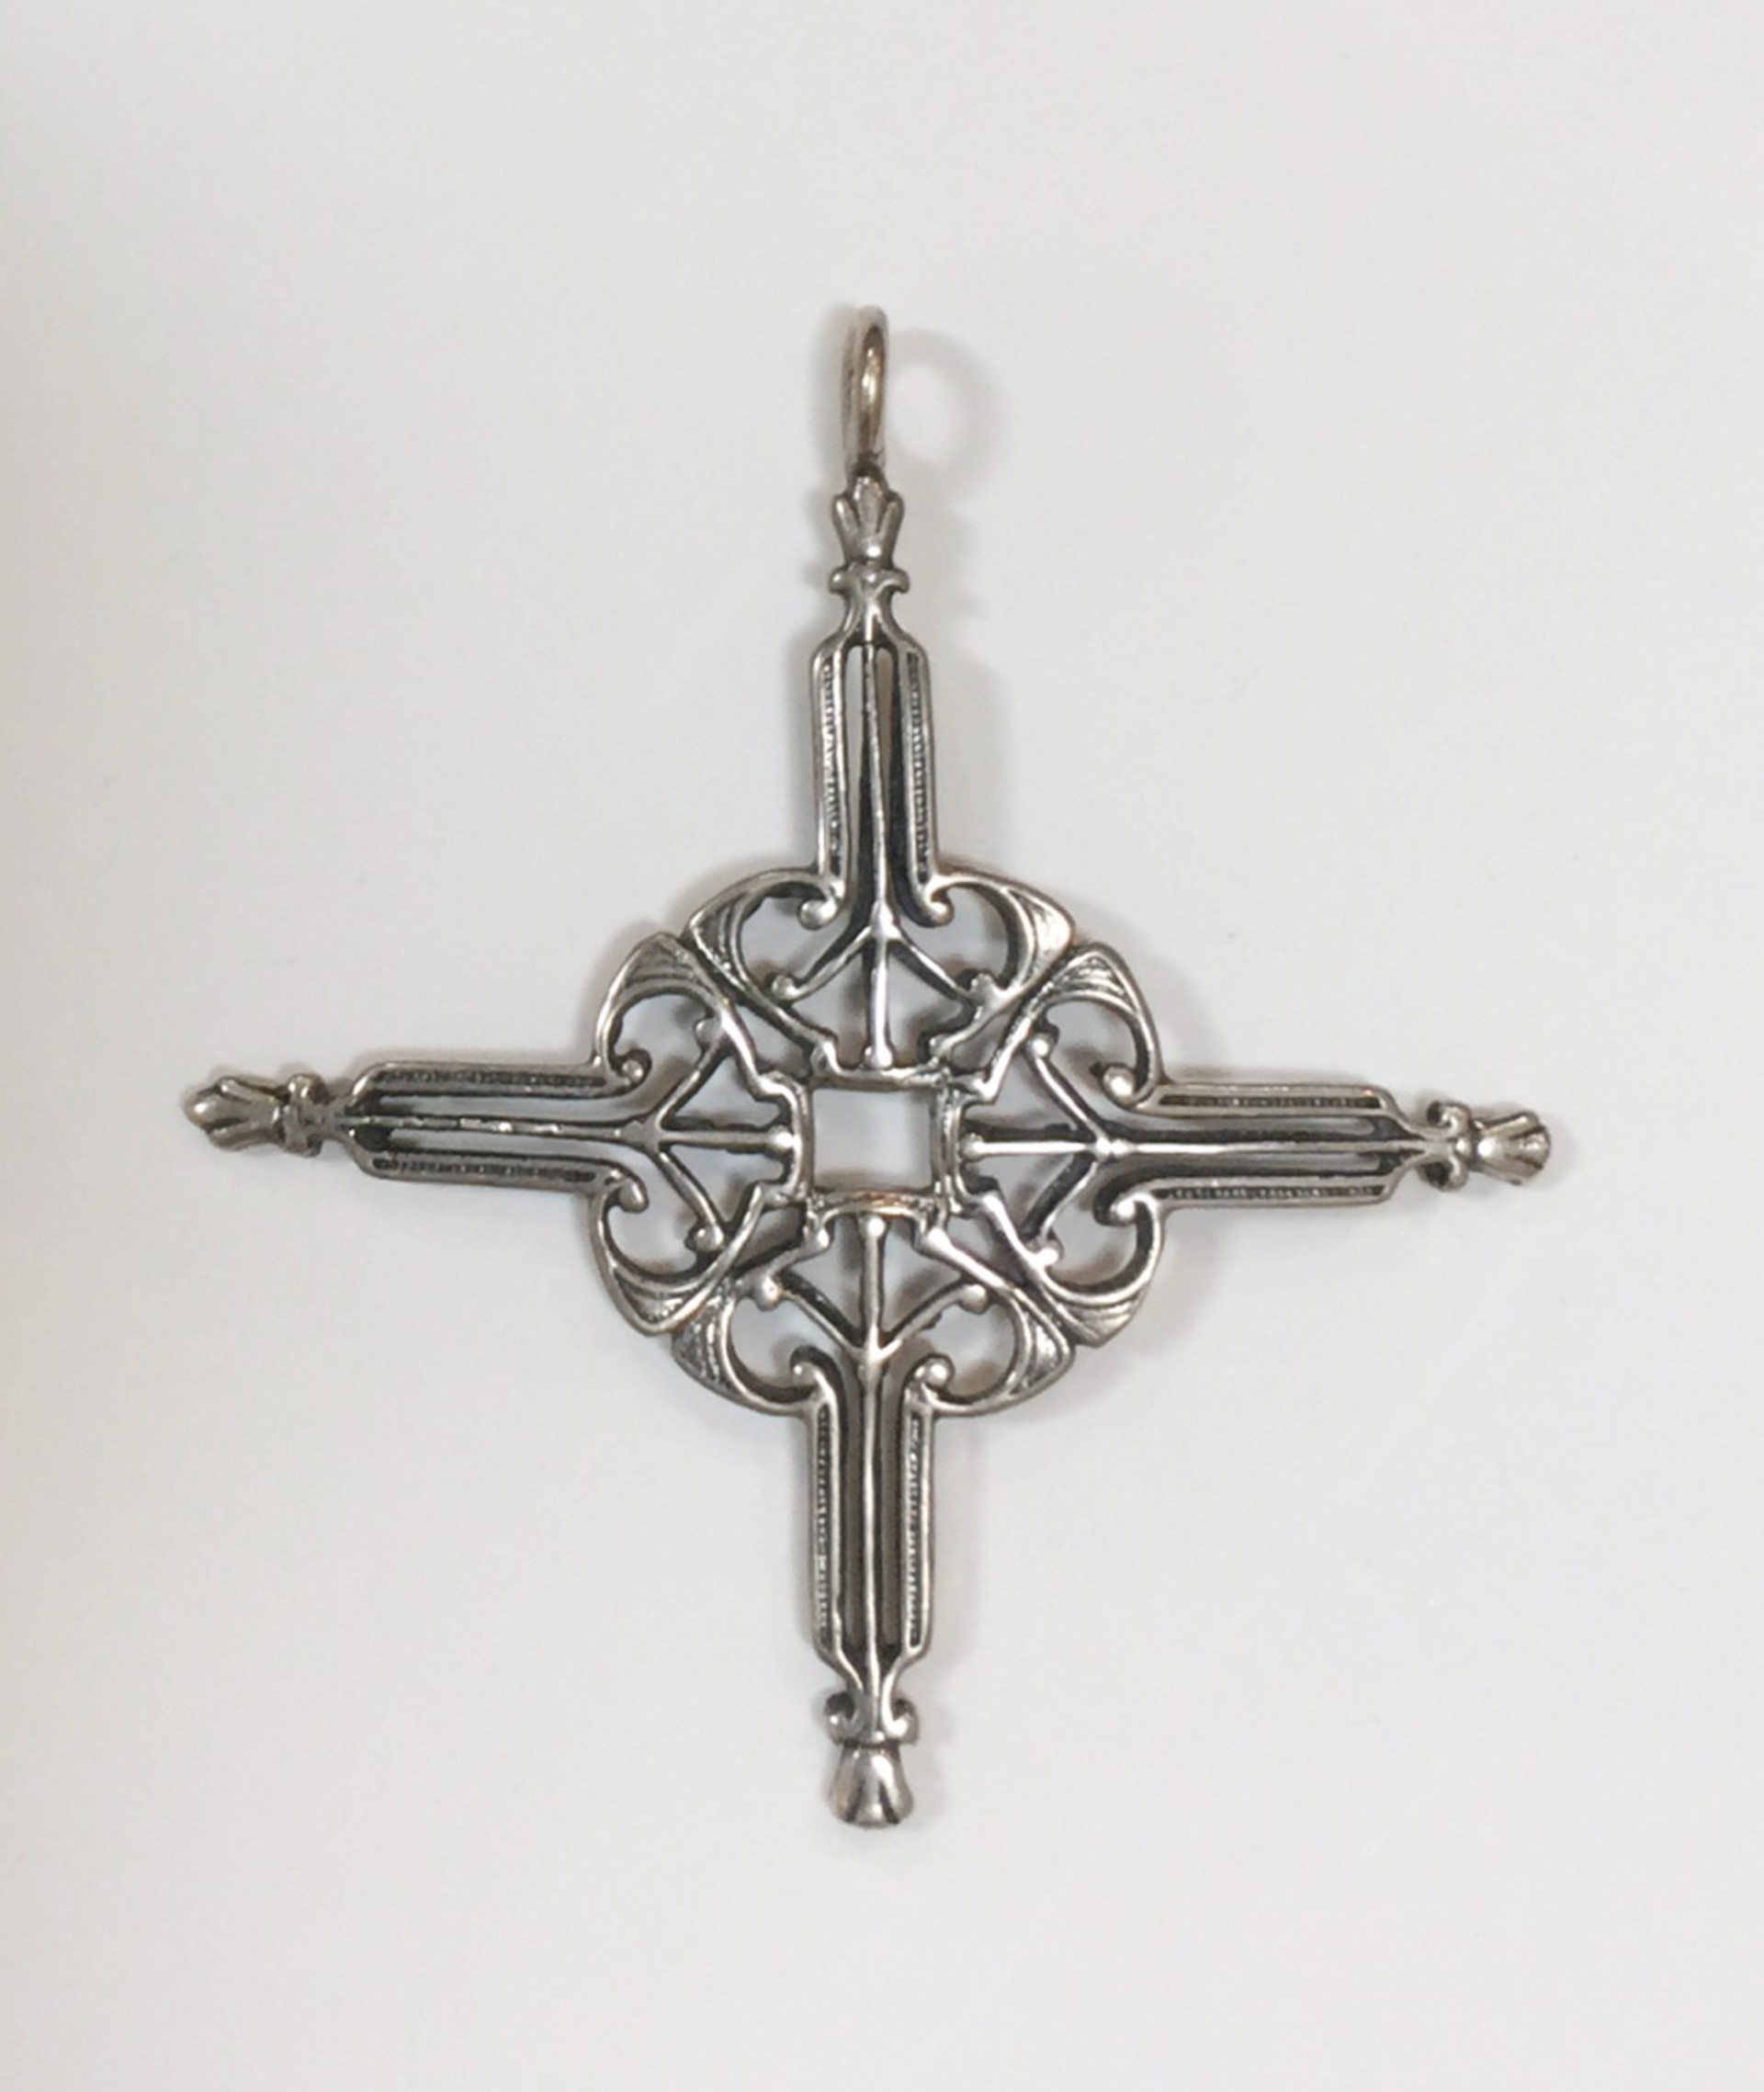 Pendant - Silver St Clotilde Cross 7326 by Deanne McKeown